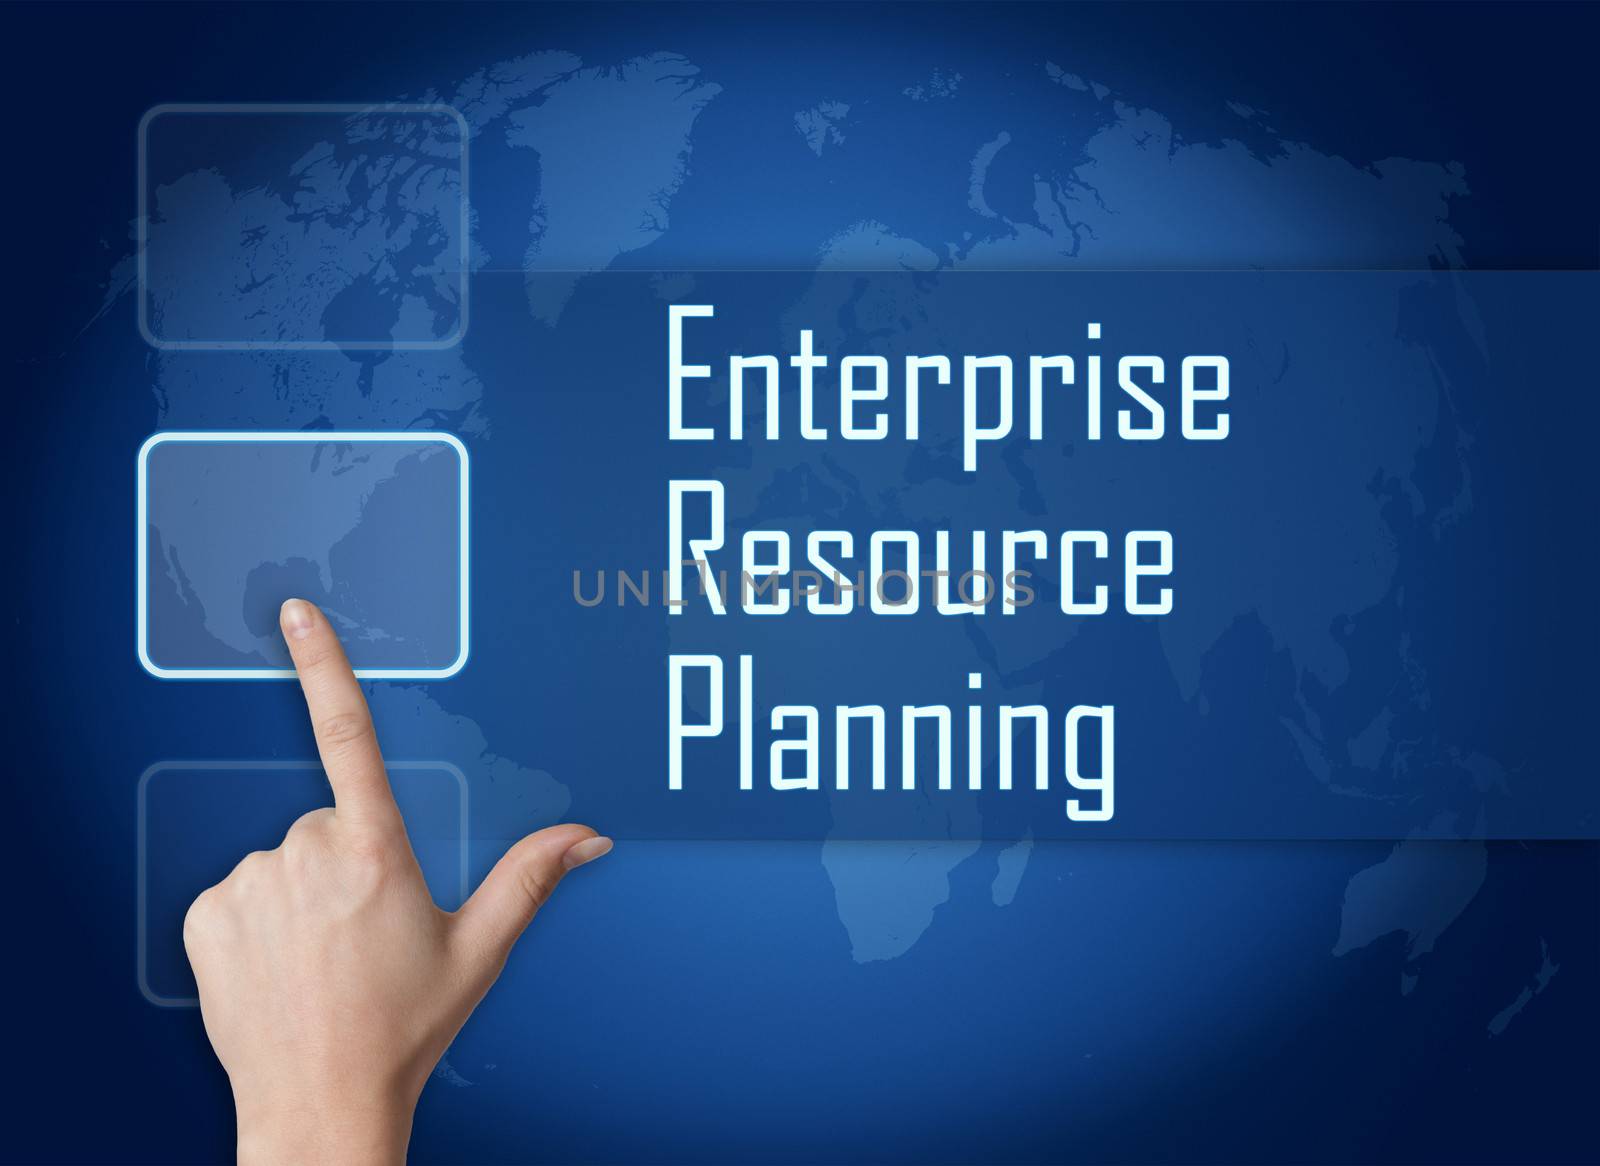 Enterprise Resource Planning by Mazirama